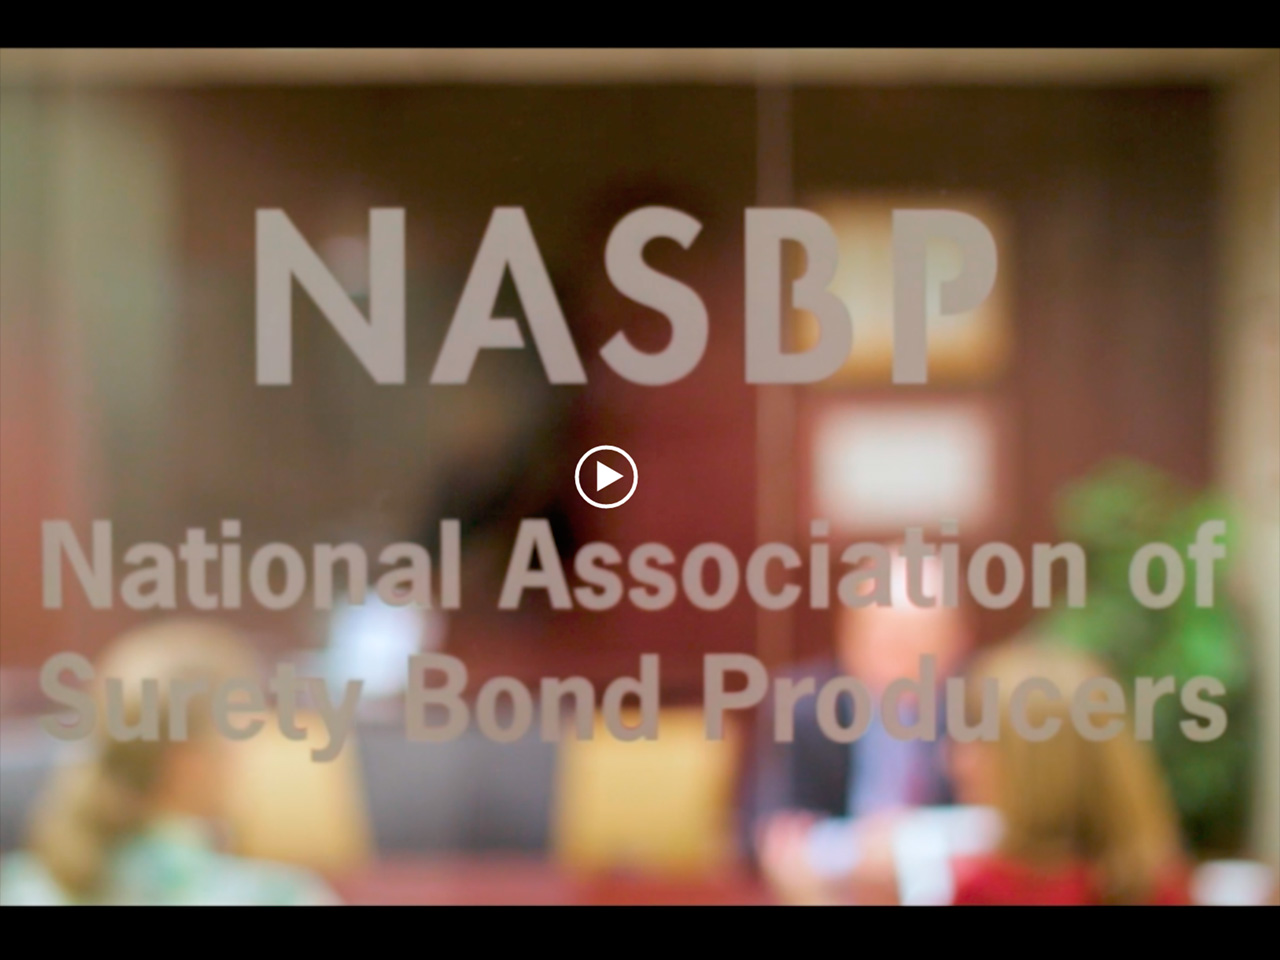 NASBP 75th Anniversary